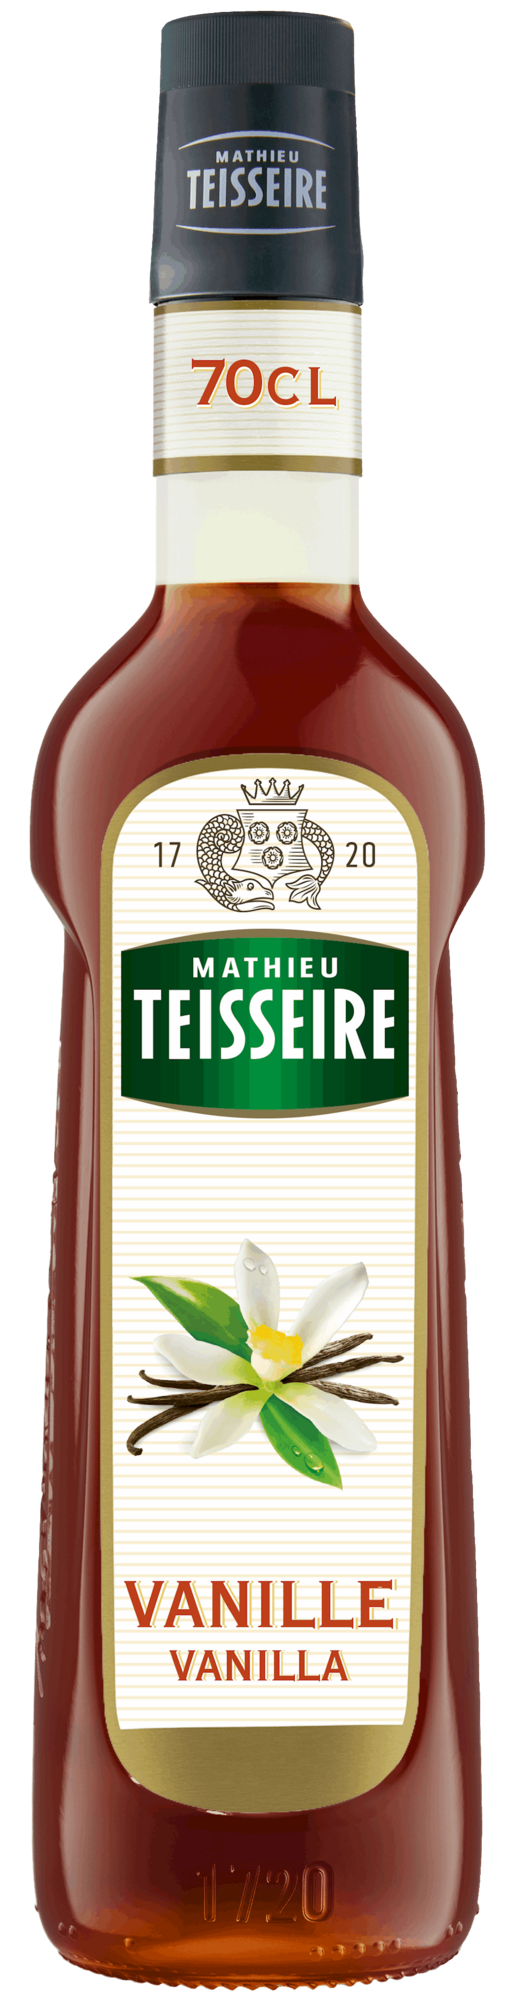 78863 Mathieu Teisseire vanillesiroop 70 cl